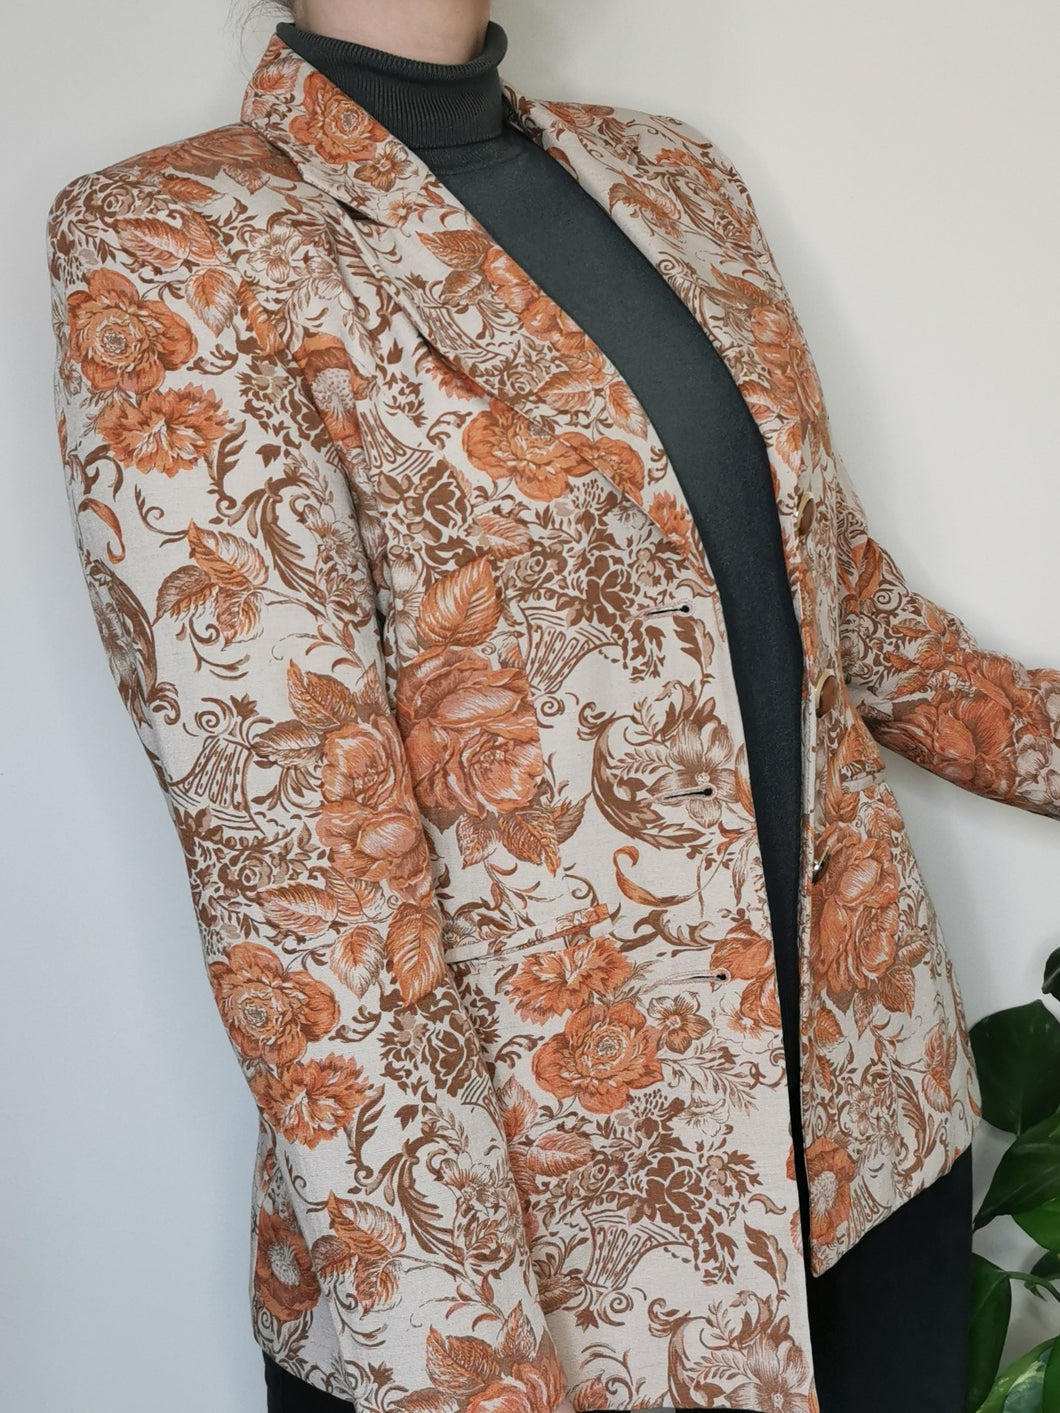 Vintage Italian floral blazer